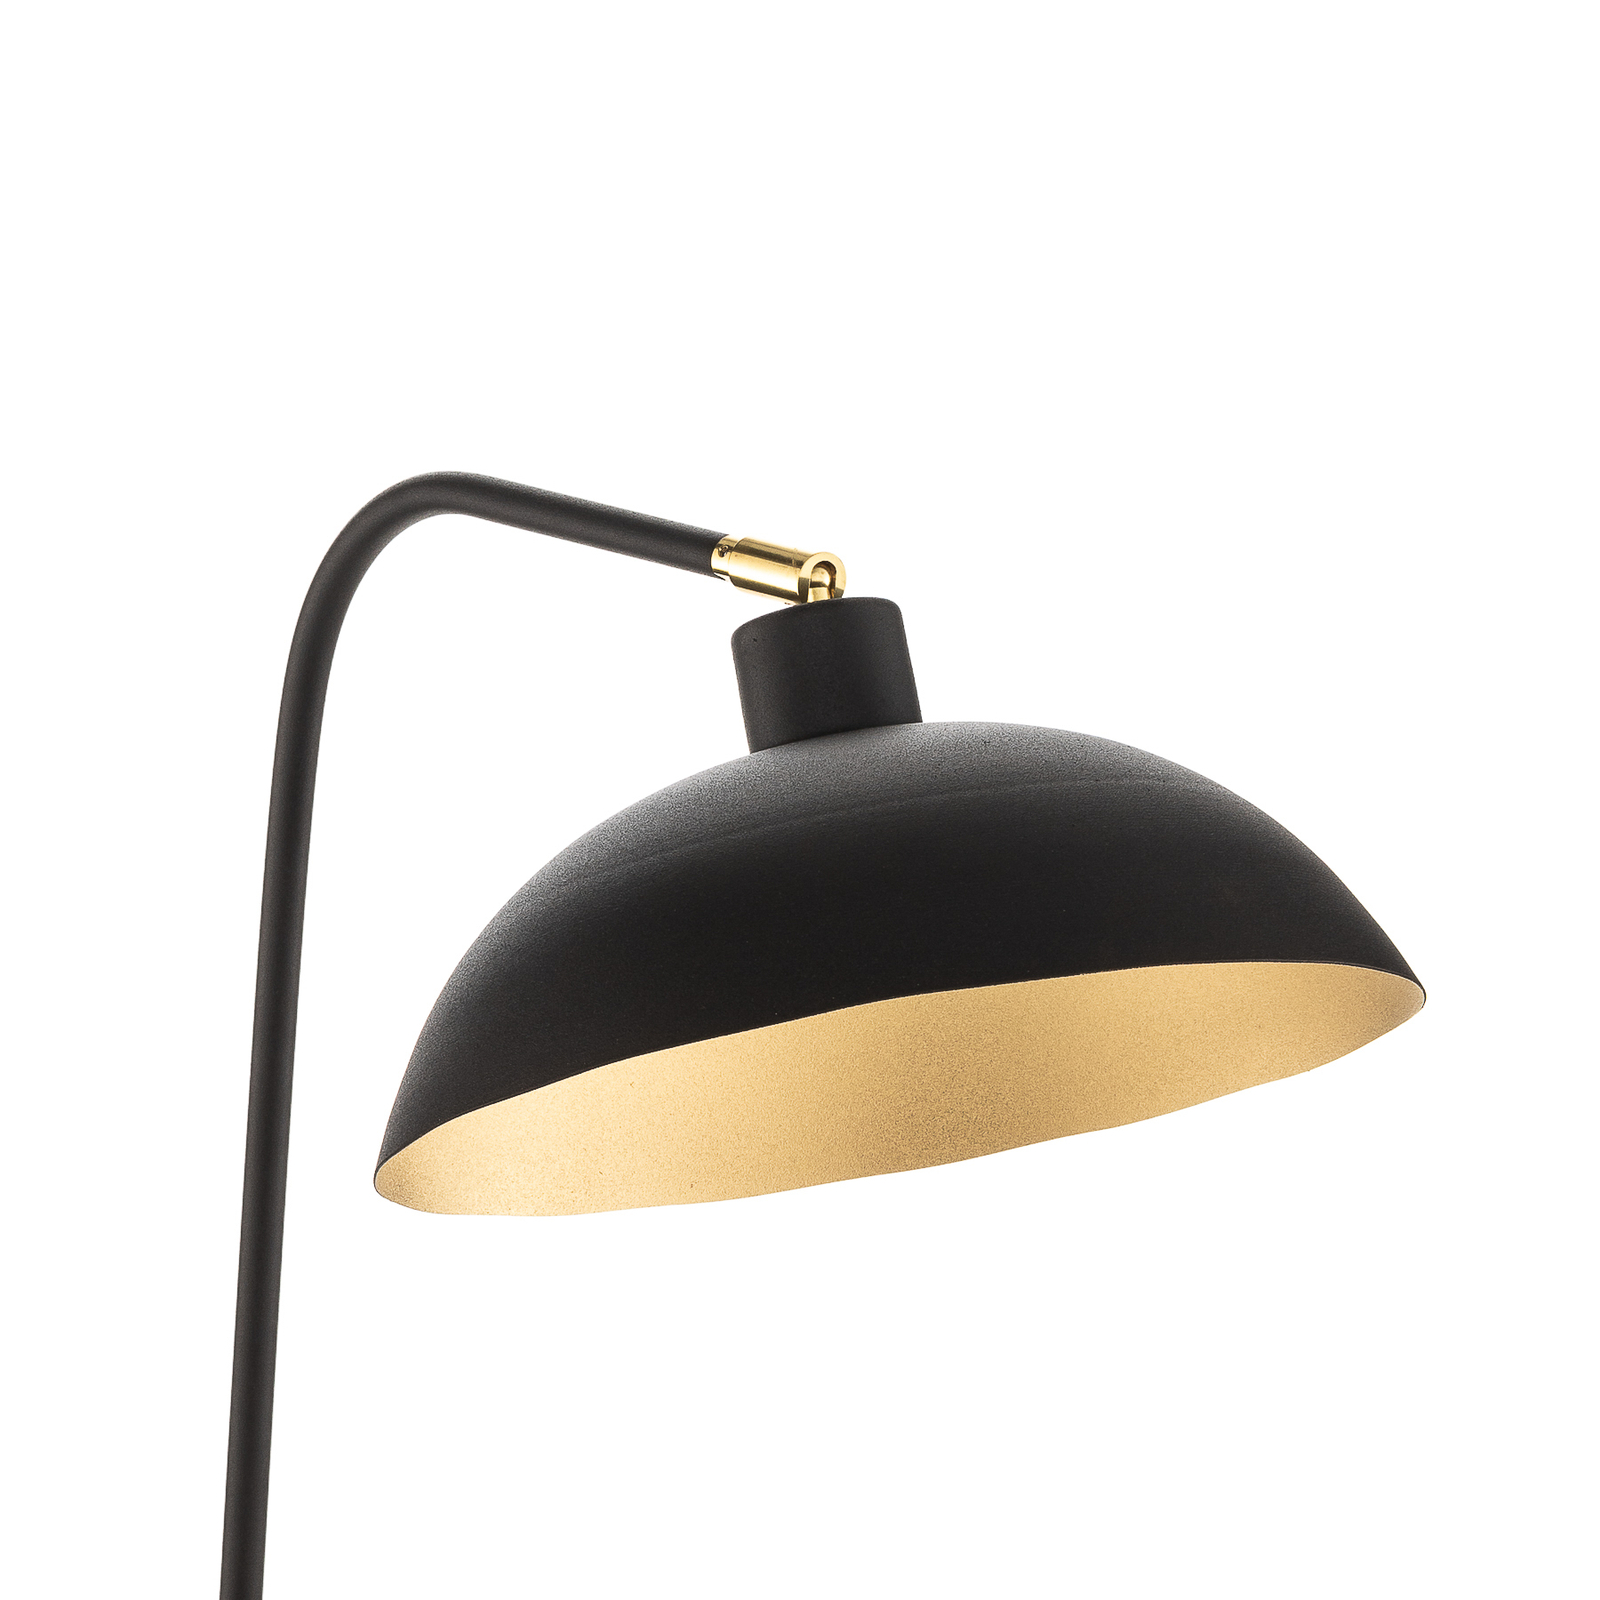 Vloerlamp 1036, 1-lamp, zwart-goud